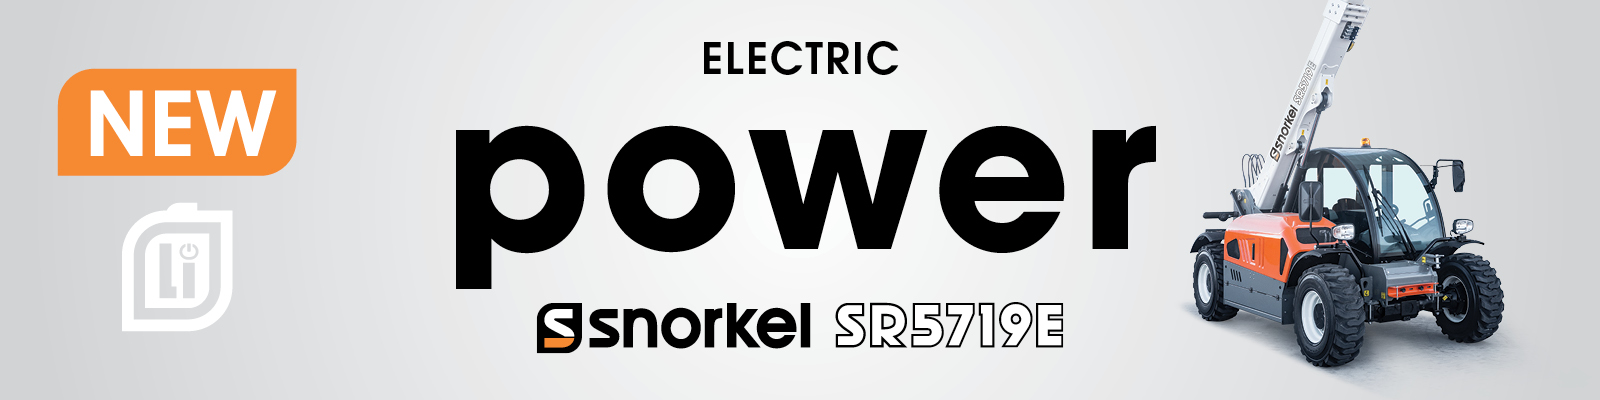 Electric Power Snorkel SR5719E lithium ion telehandler